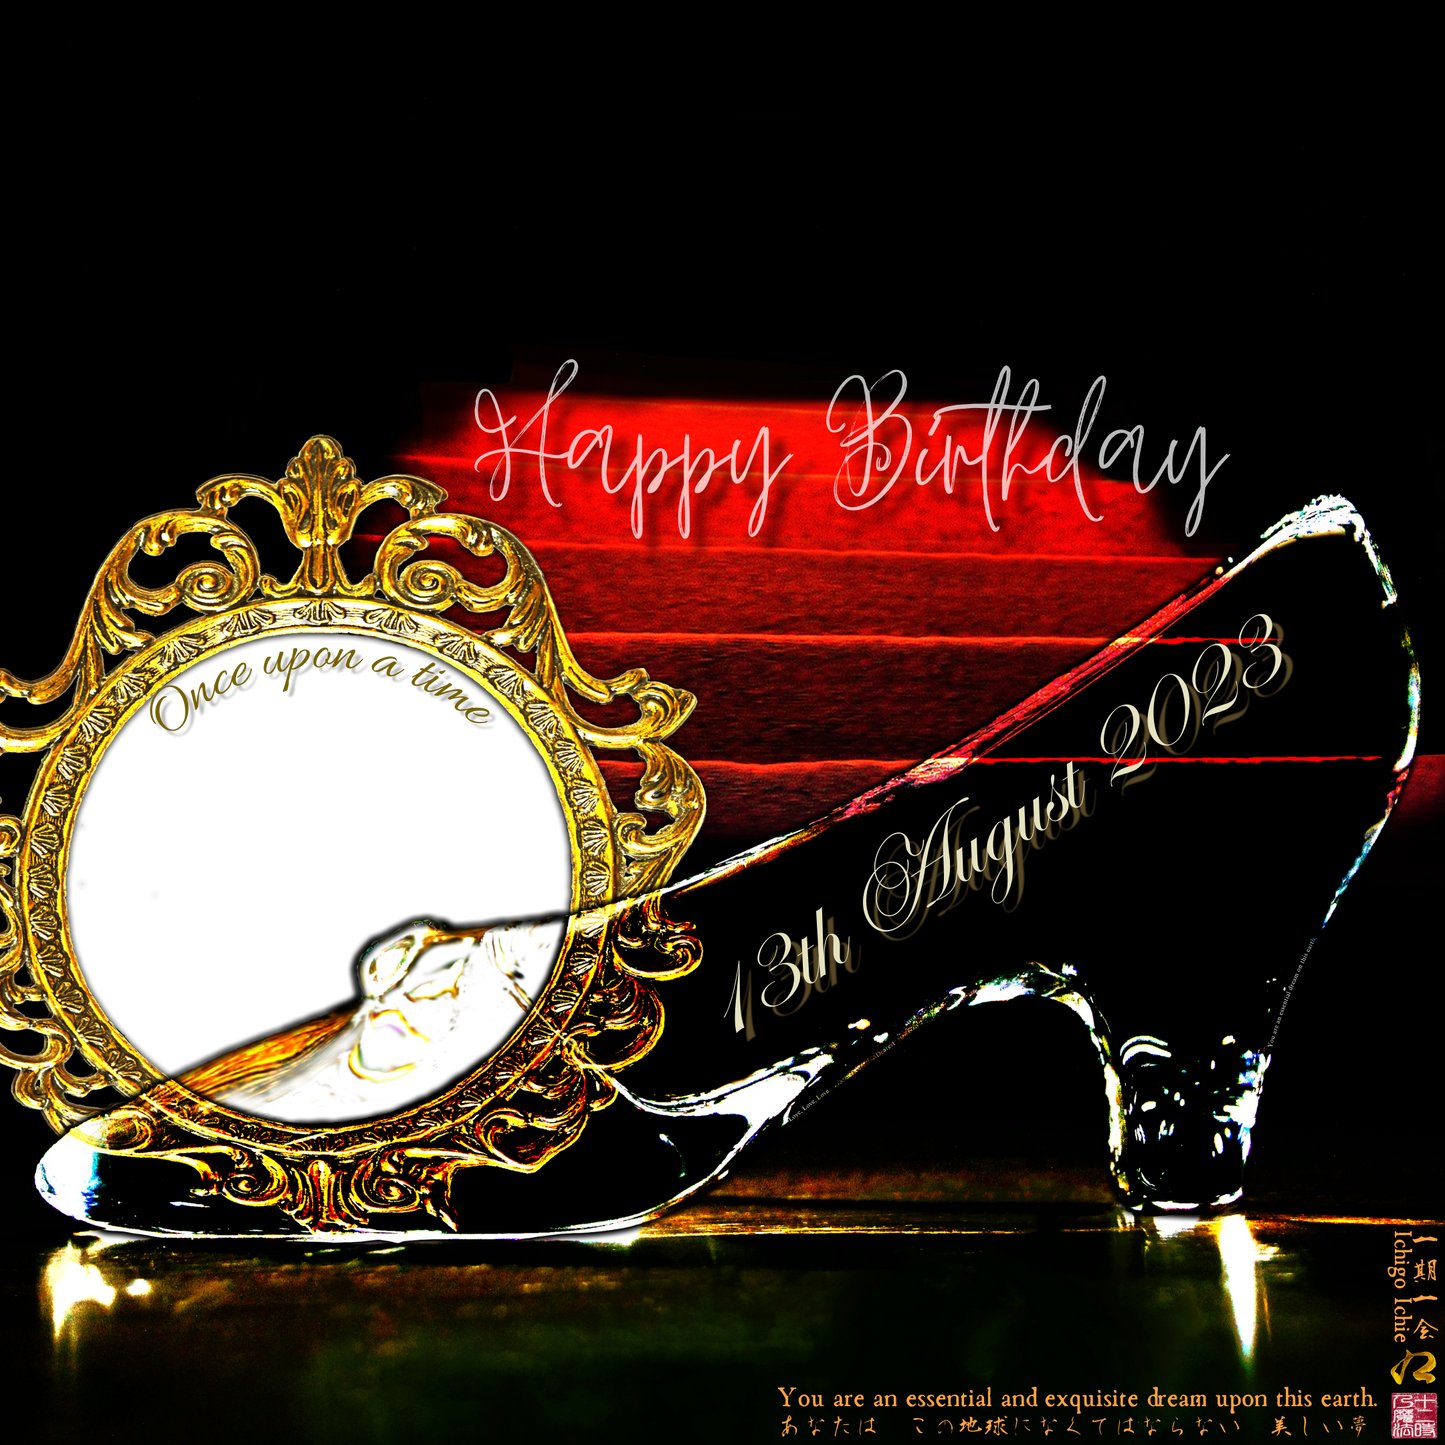 Happy Birthday Glass Slipper "Ichigo Ichie" 13th August 2023 the Left (1-of-1) NFT Art